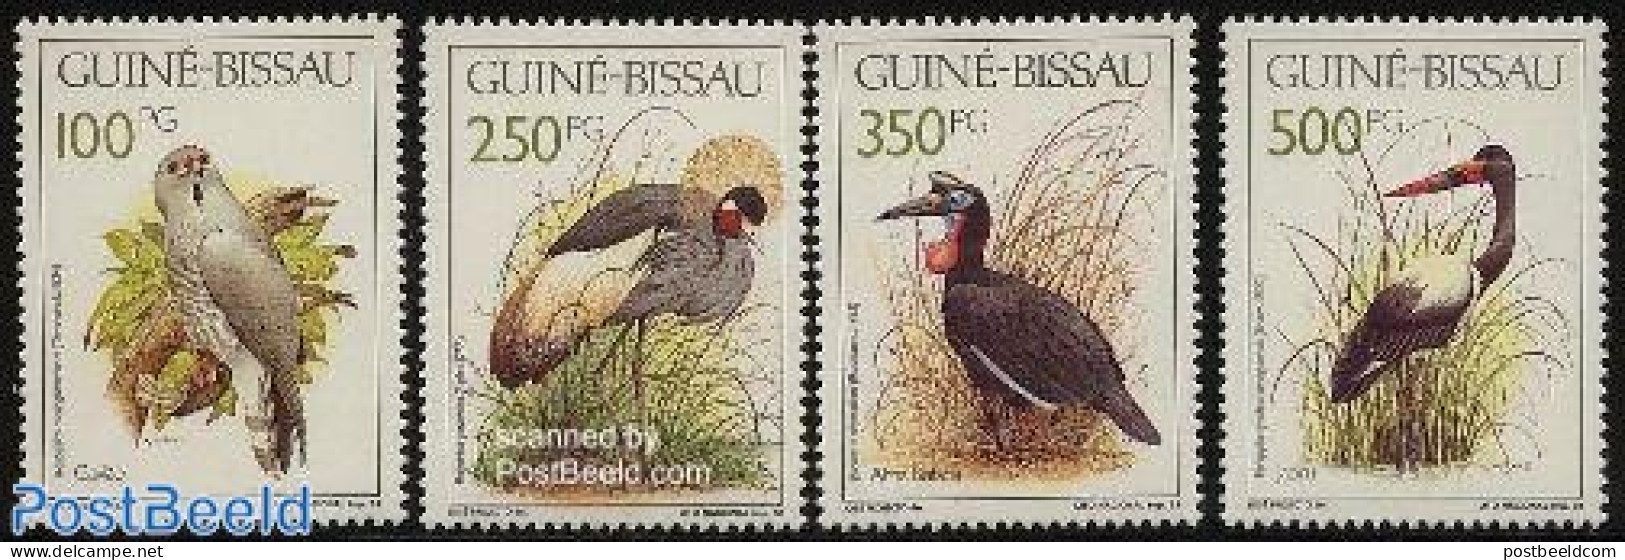 Guinea Bissau 1991 Birds 4v, Mint NH, Nature - Birds - Birds Of Prey - Guinea-Bissau